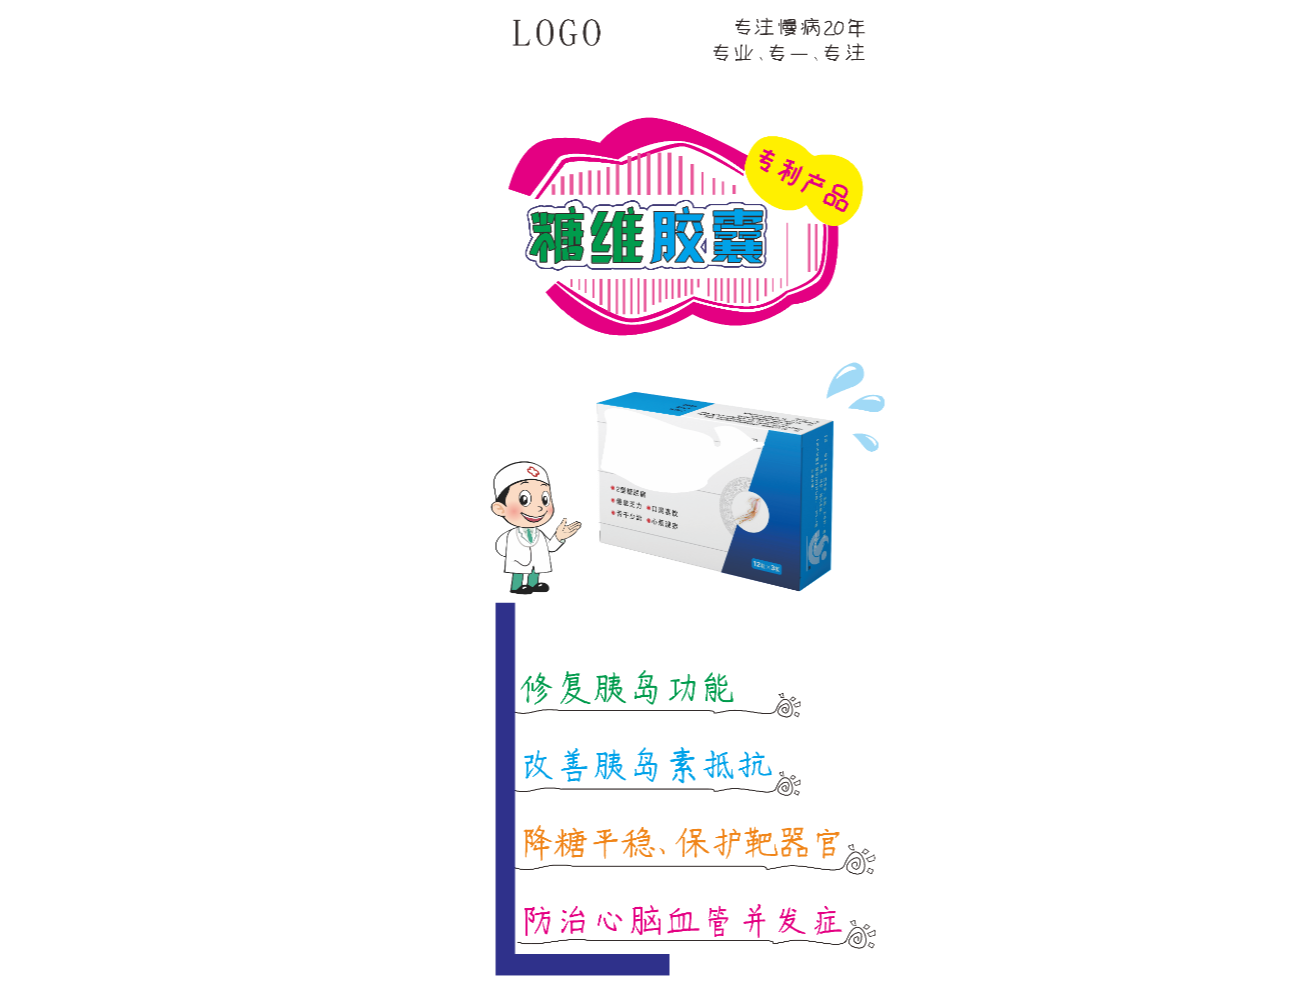 OPPO A92s 新品上市 手绘POP海报_搜狐汽车_搜狐网